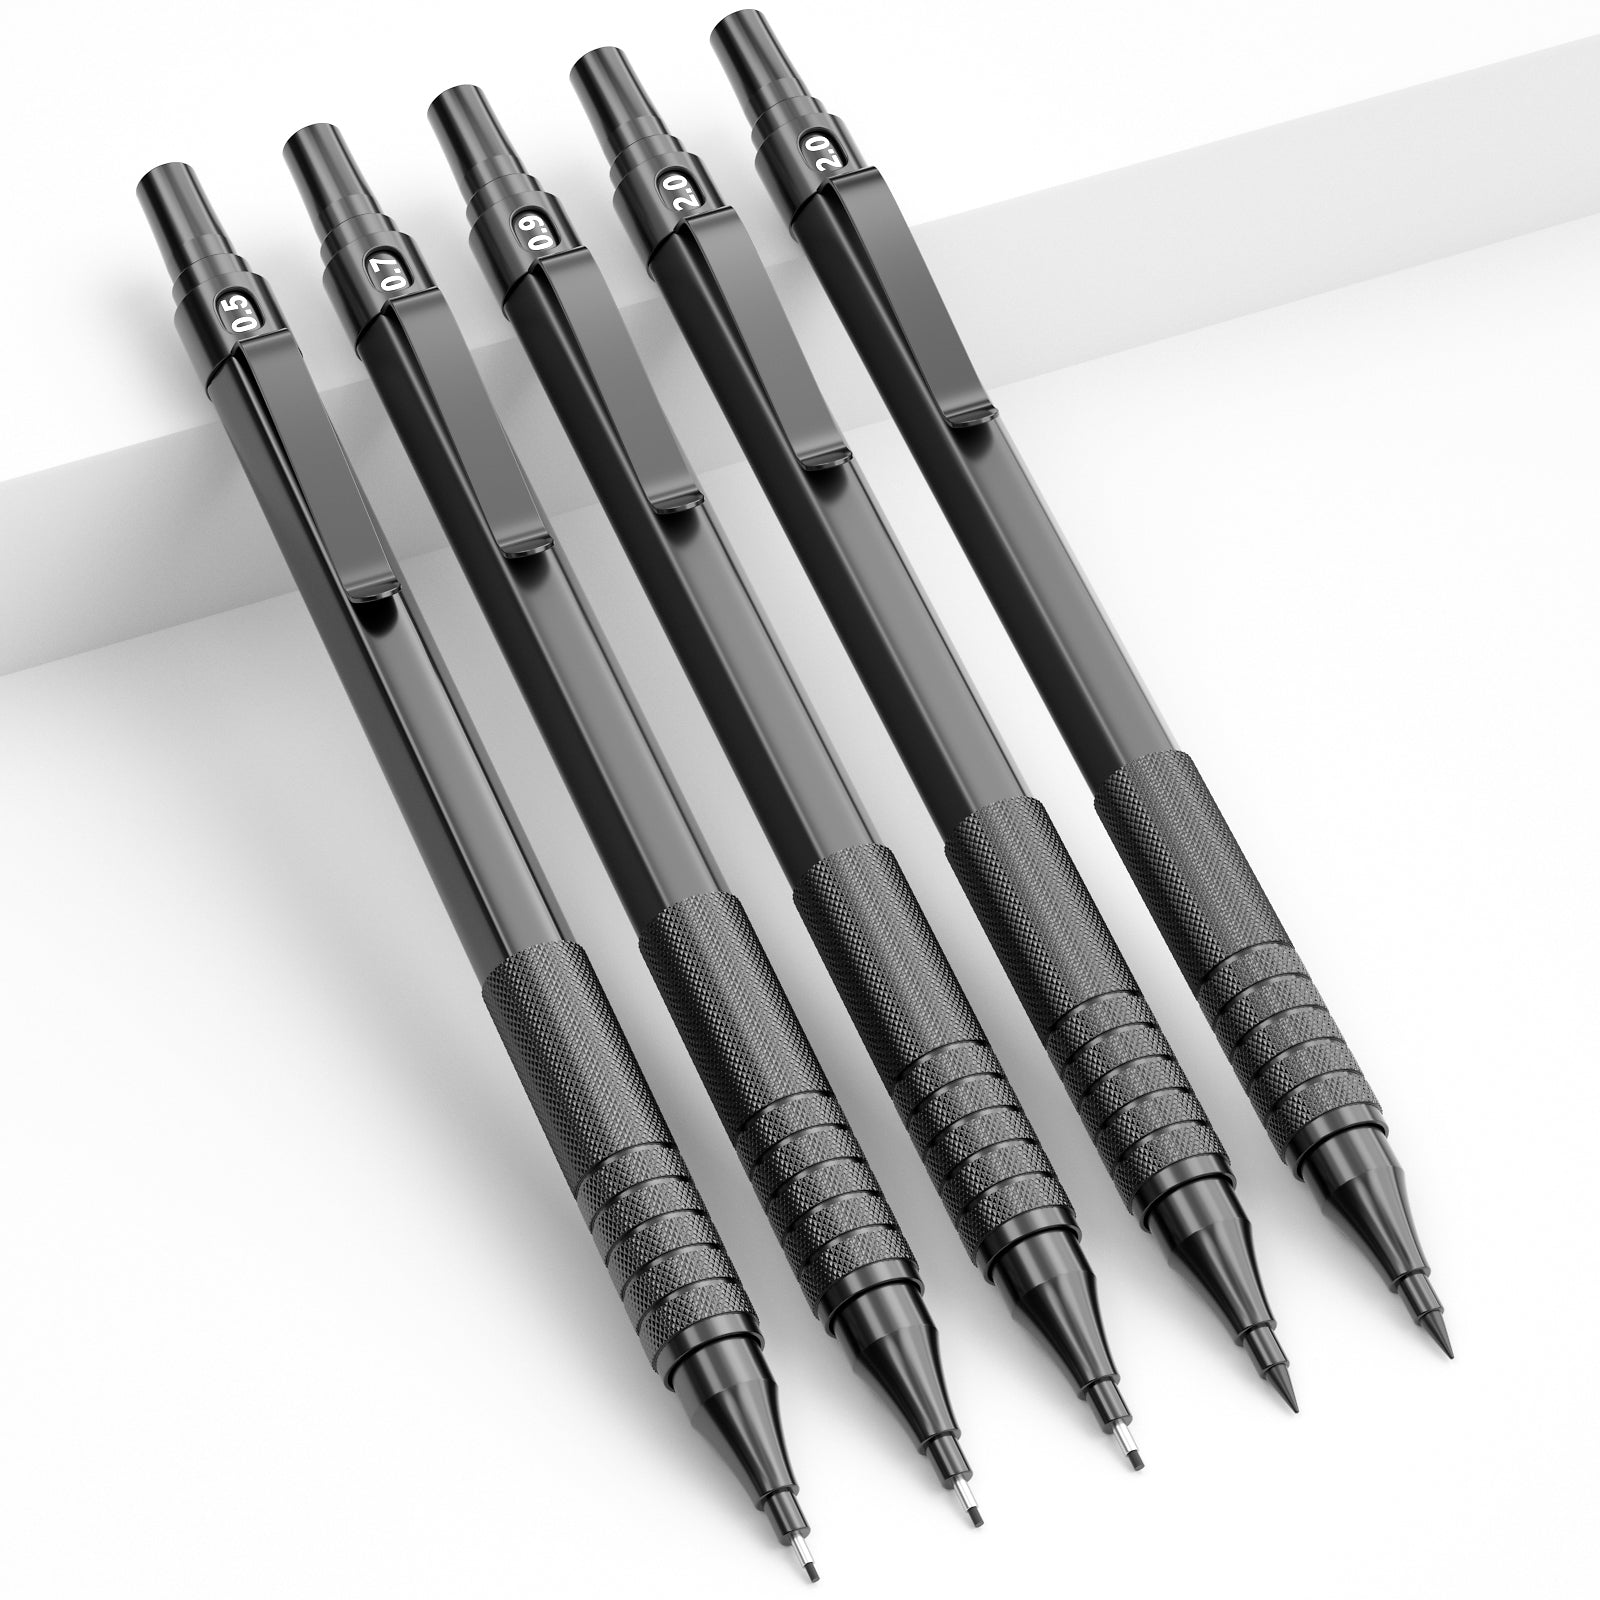 Nicpro 0.5 mm Art Mechanical Pencils Set in Storage Case, 3 PCS Metal